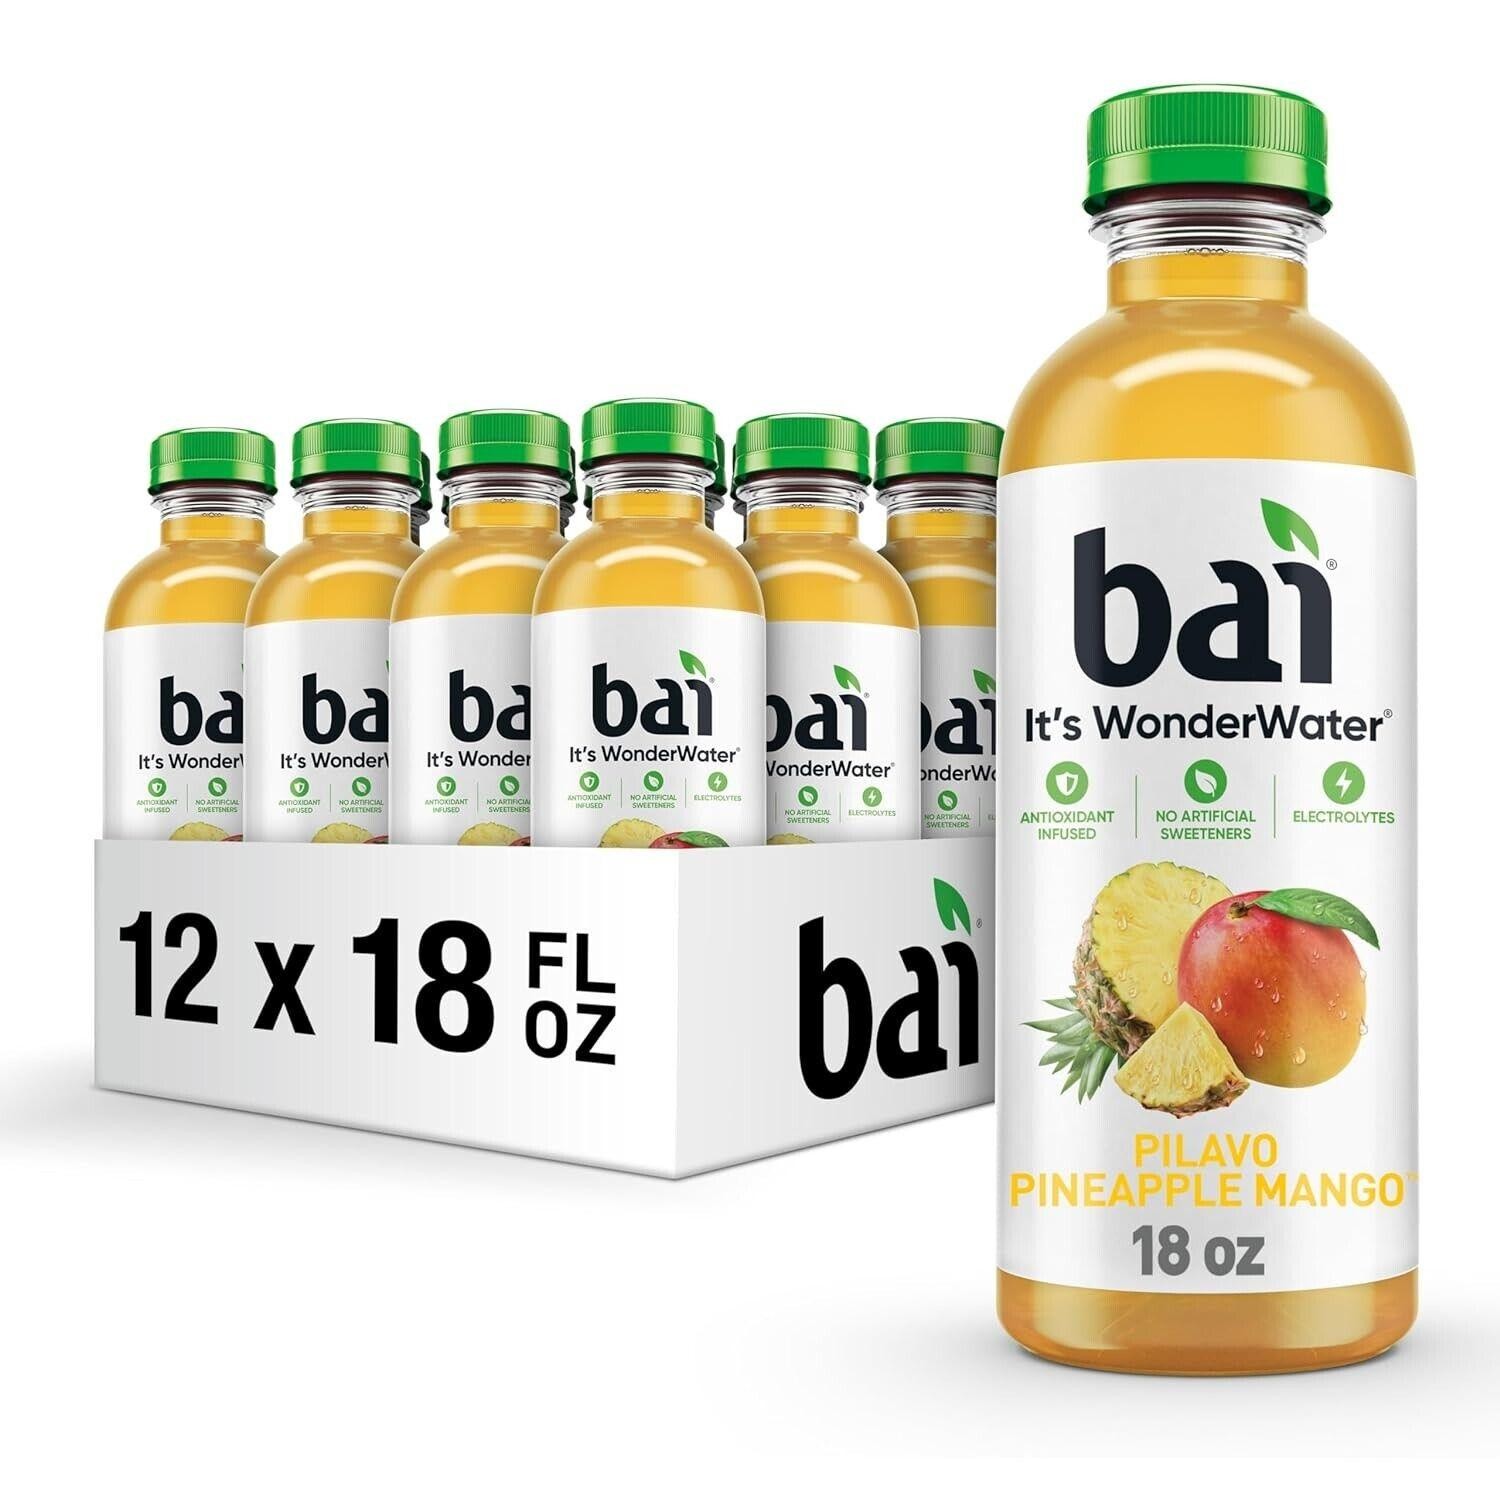 Bai Pilavo Pineapple Mango Antioxidant Infused Beverage 18 Fl Oz Bottles 12 Pack